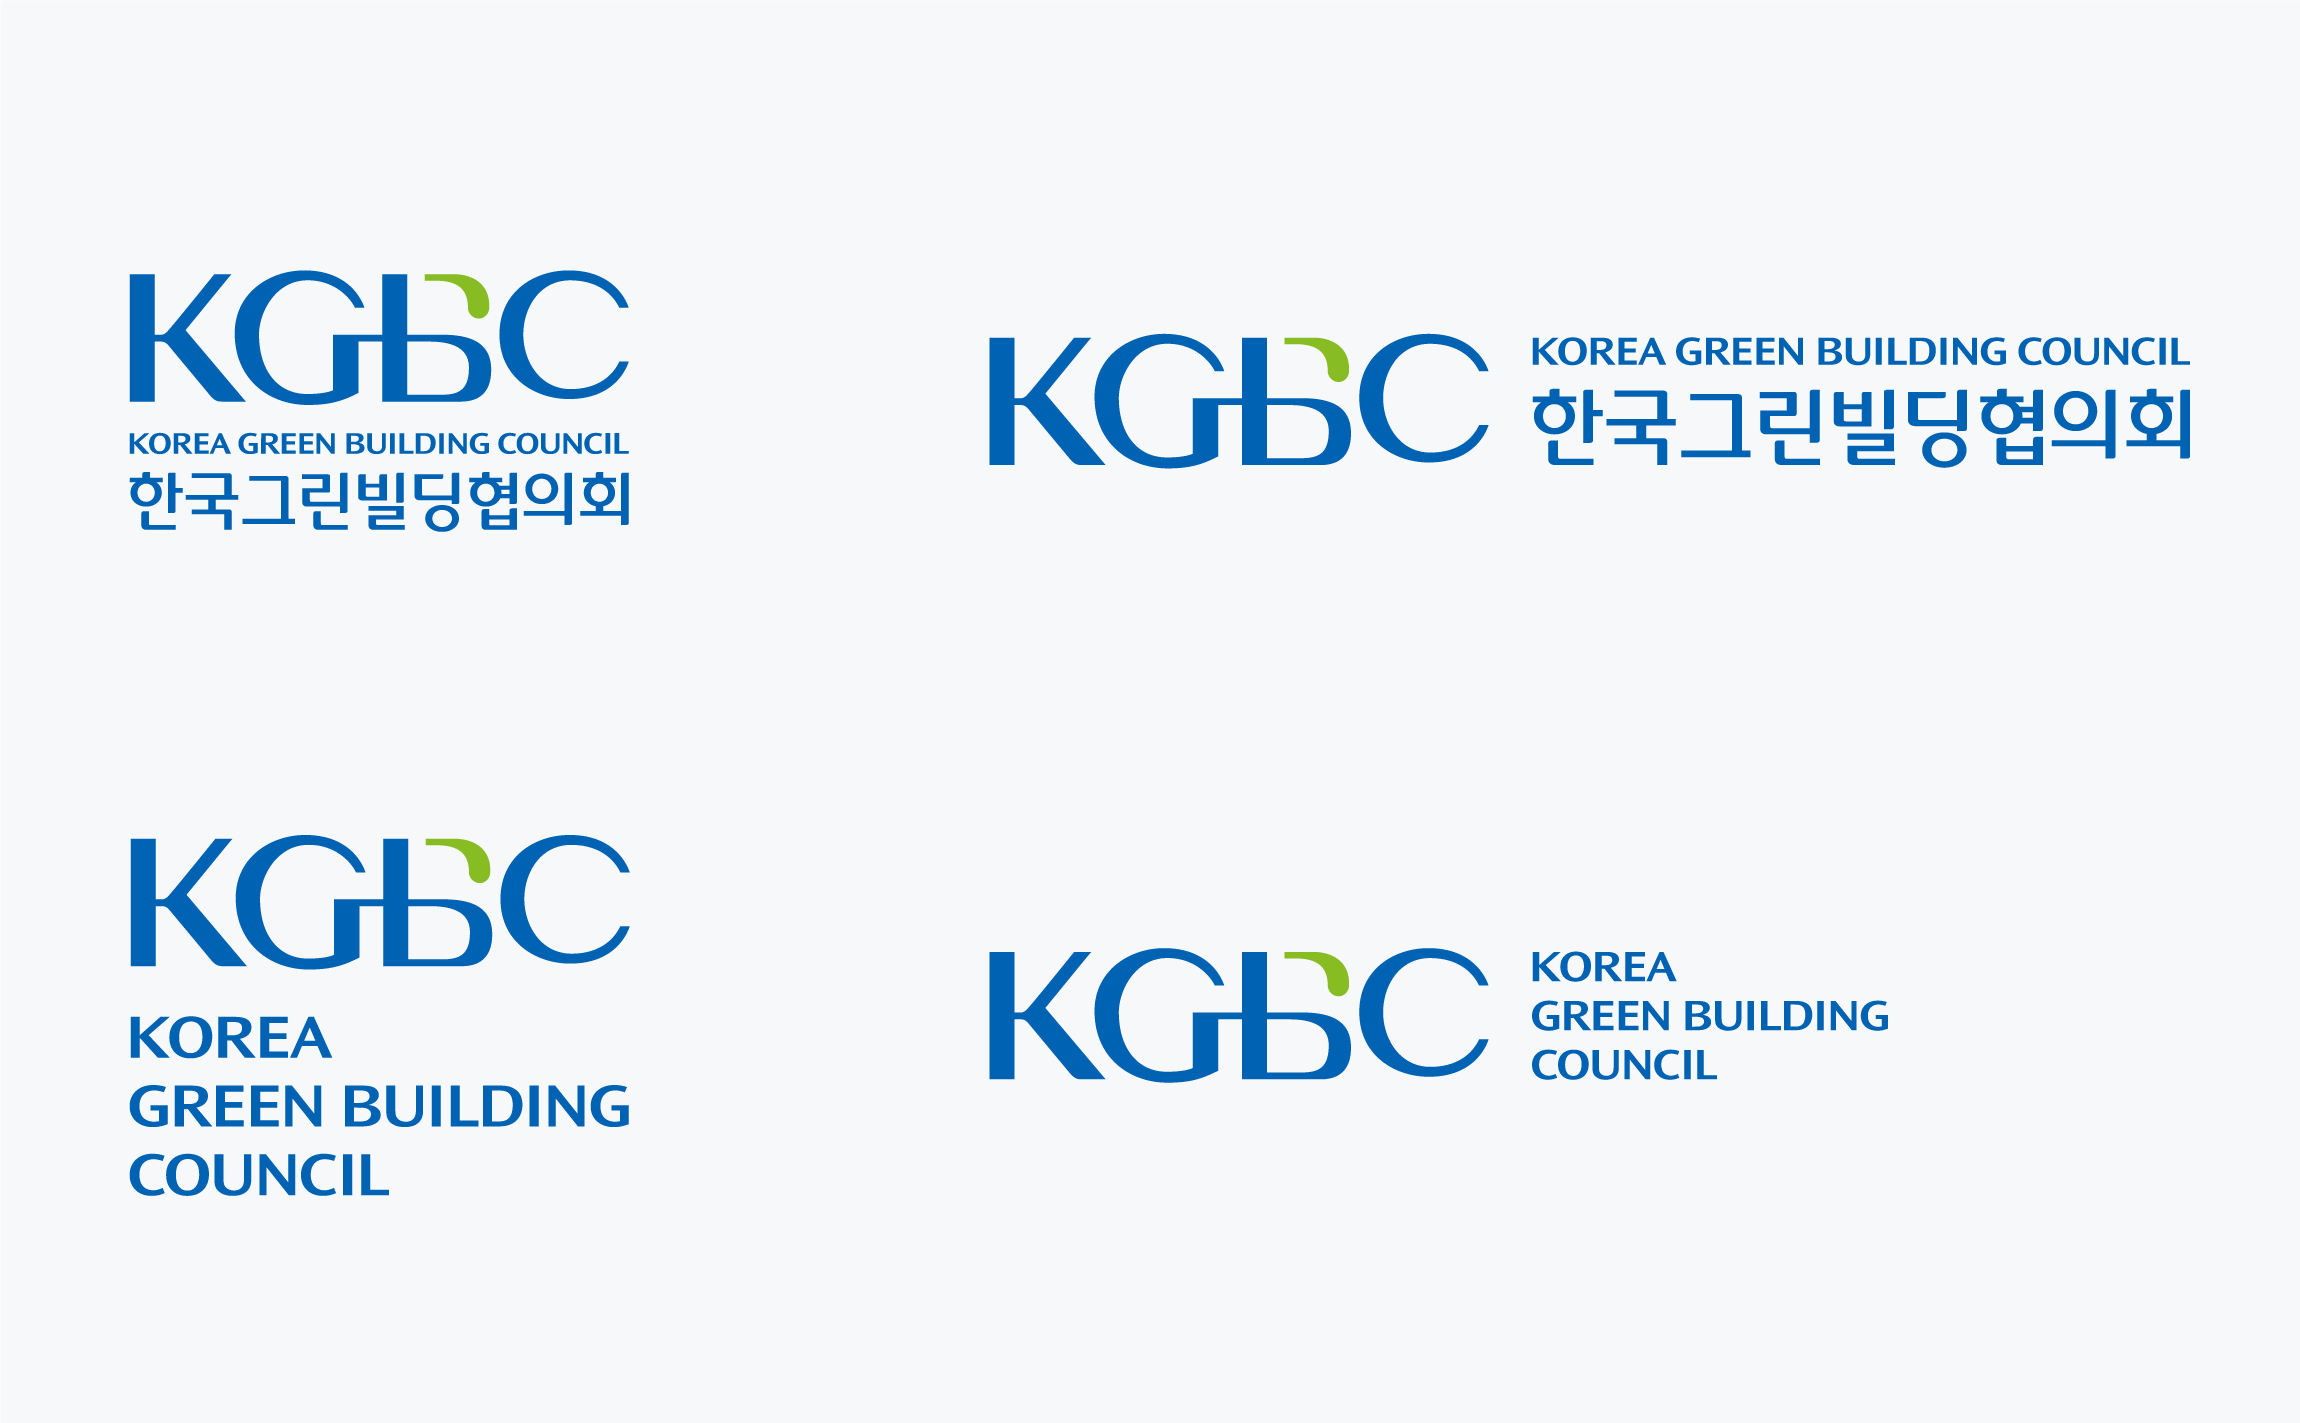 CI system for KGBC KGBC Branding & Identity kgbc-ci-1-1.png